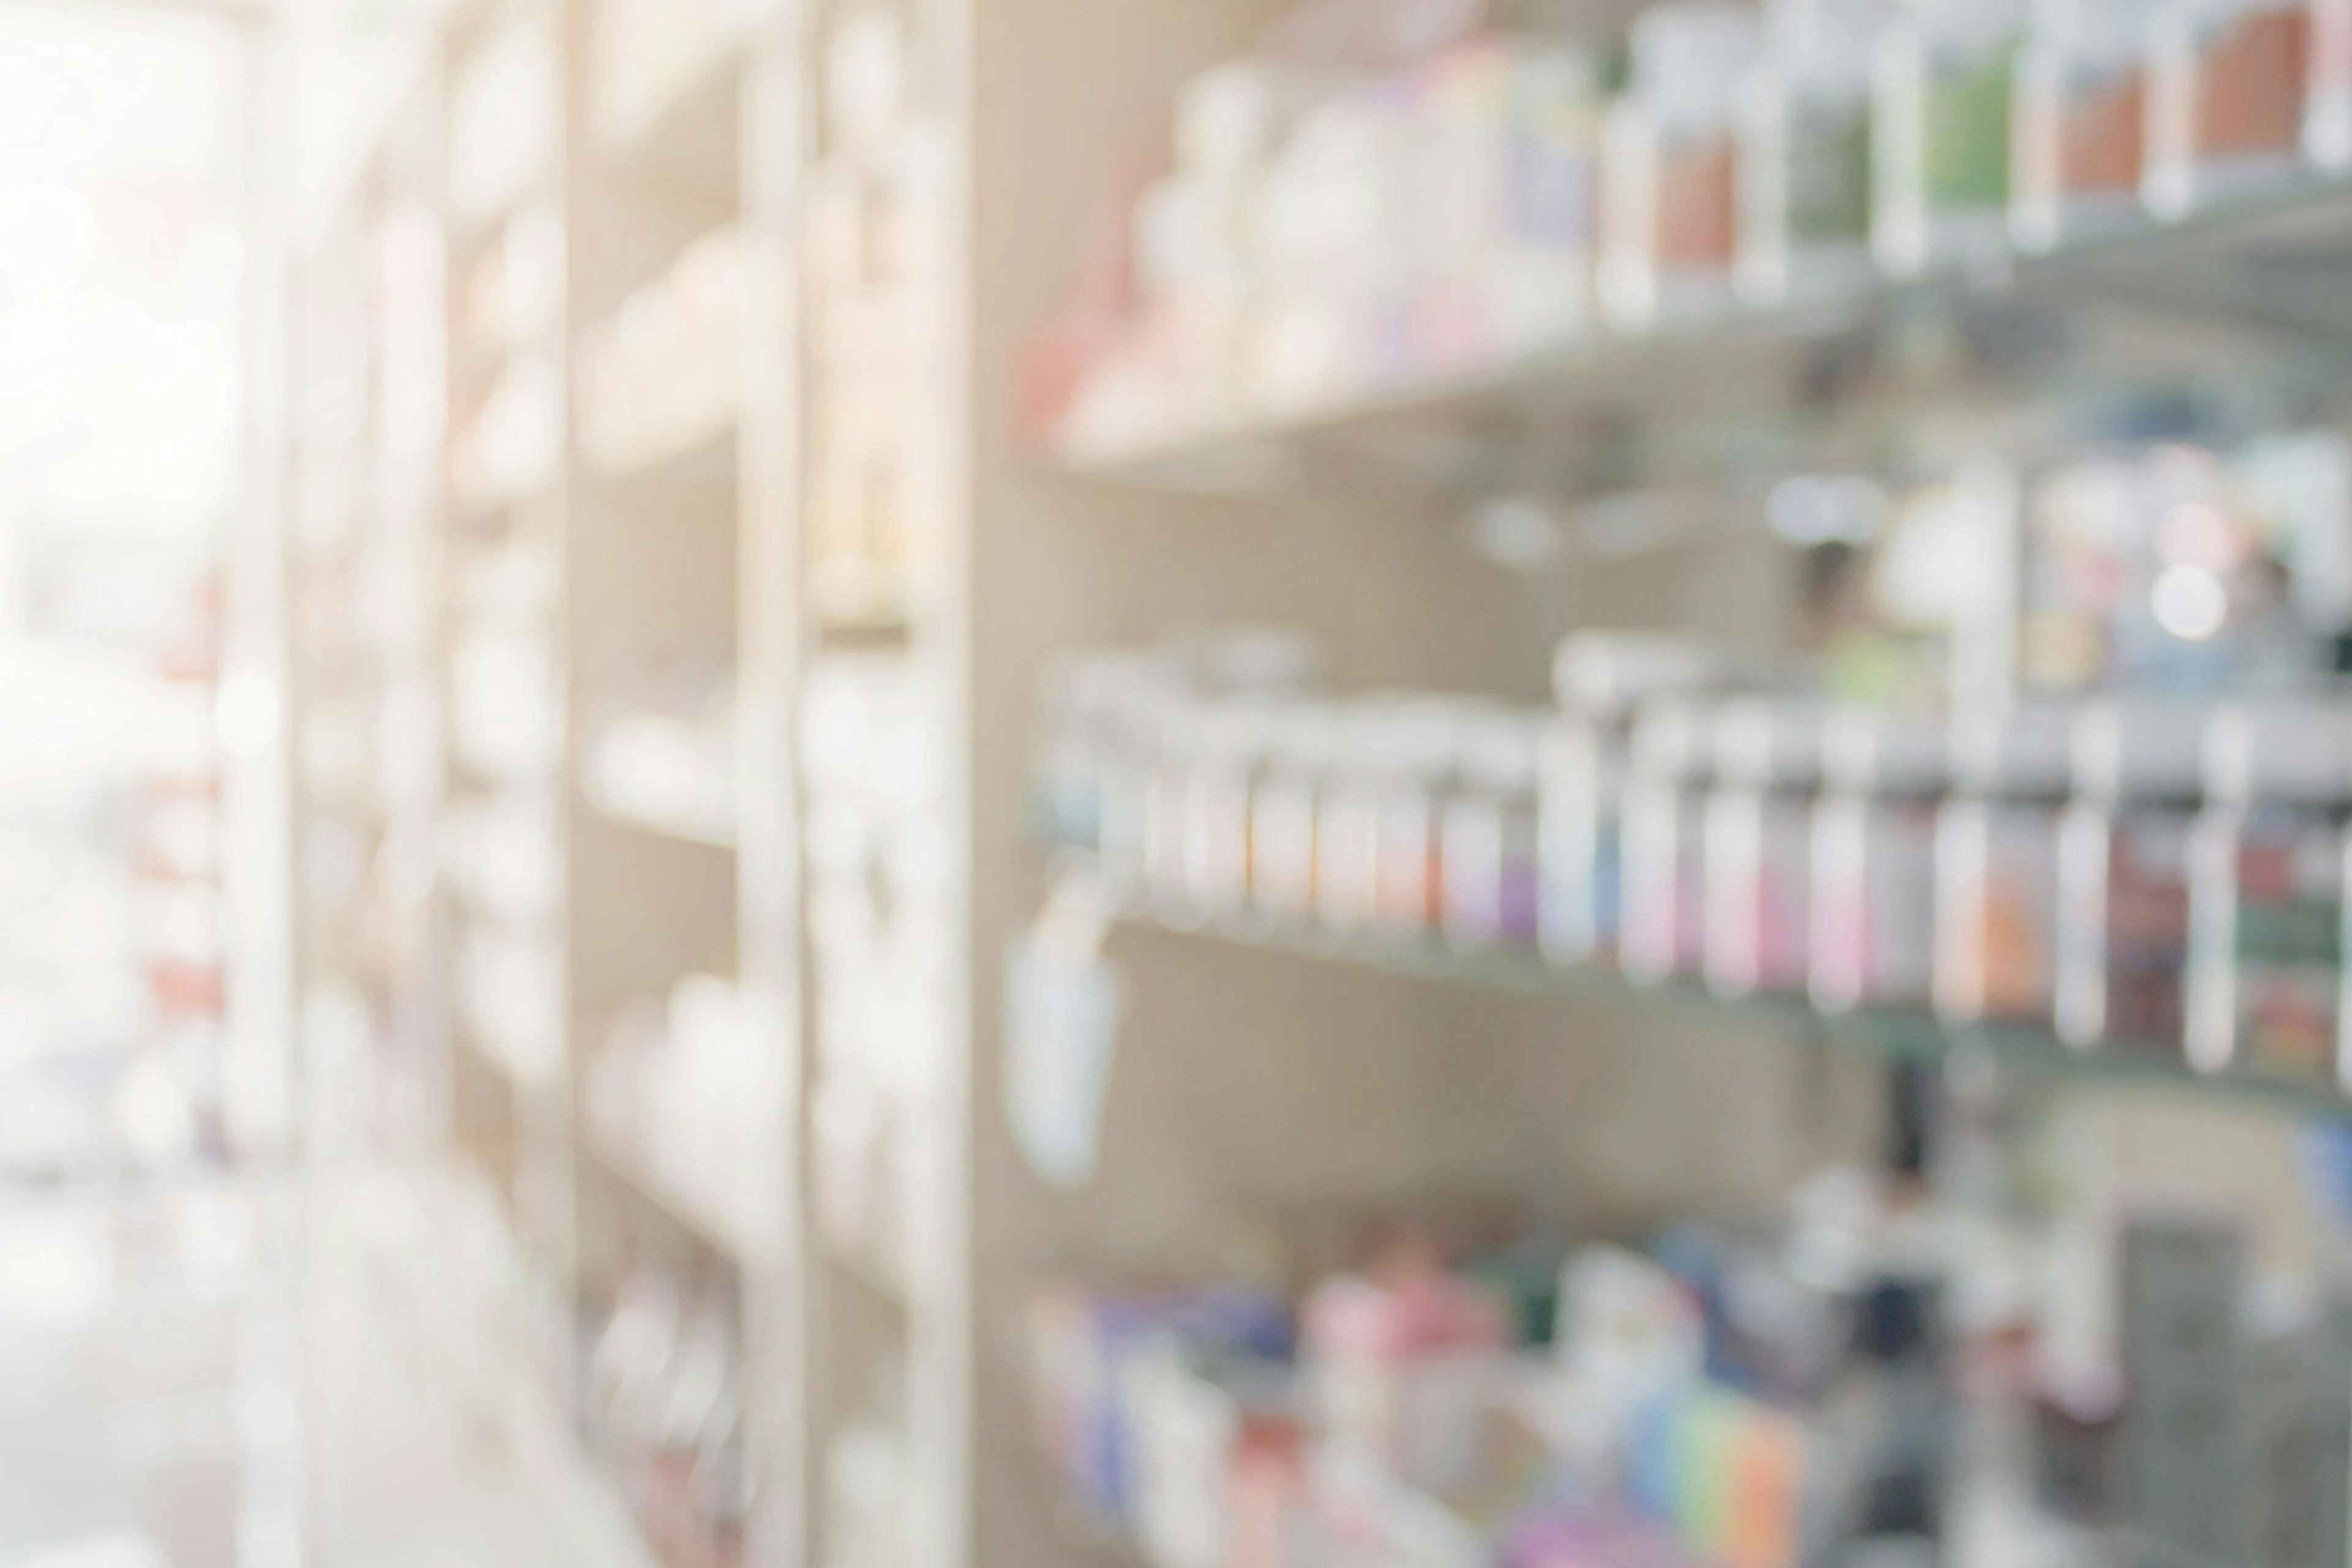 When pharmacies threaten treatment plans, look elsewhere